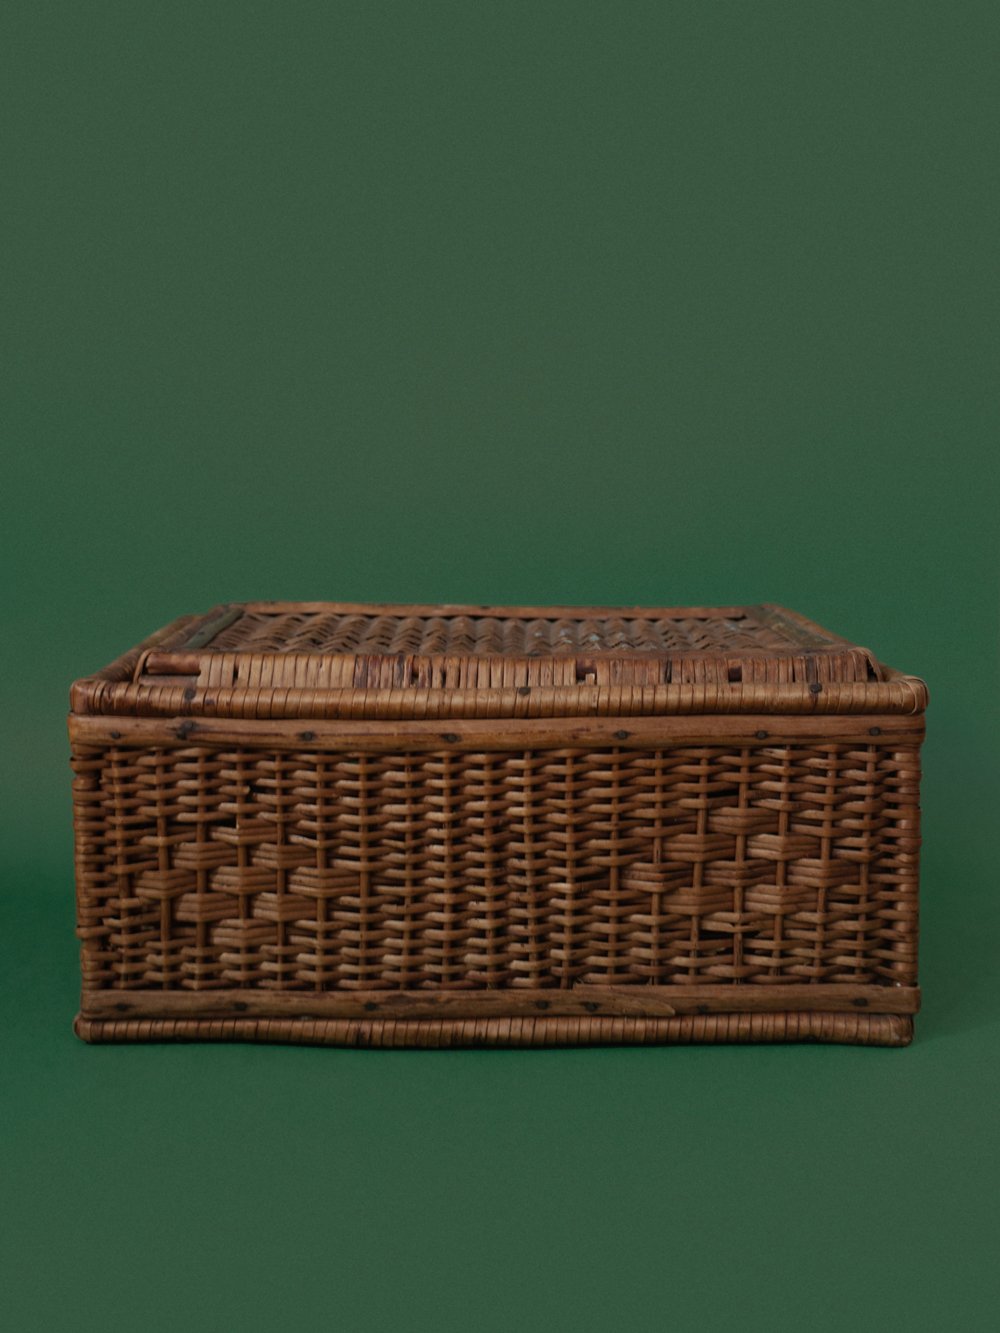 Image of wicker box